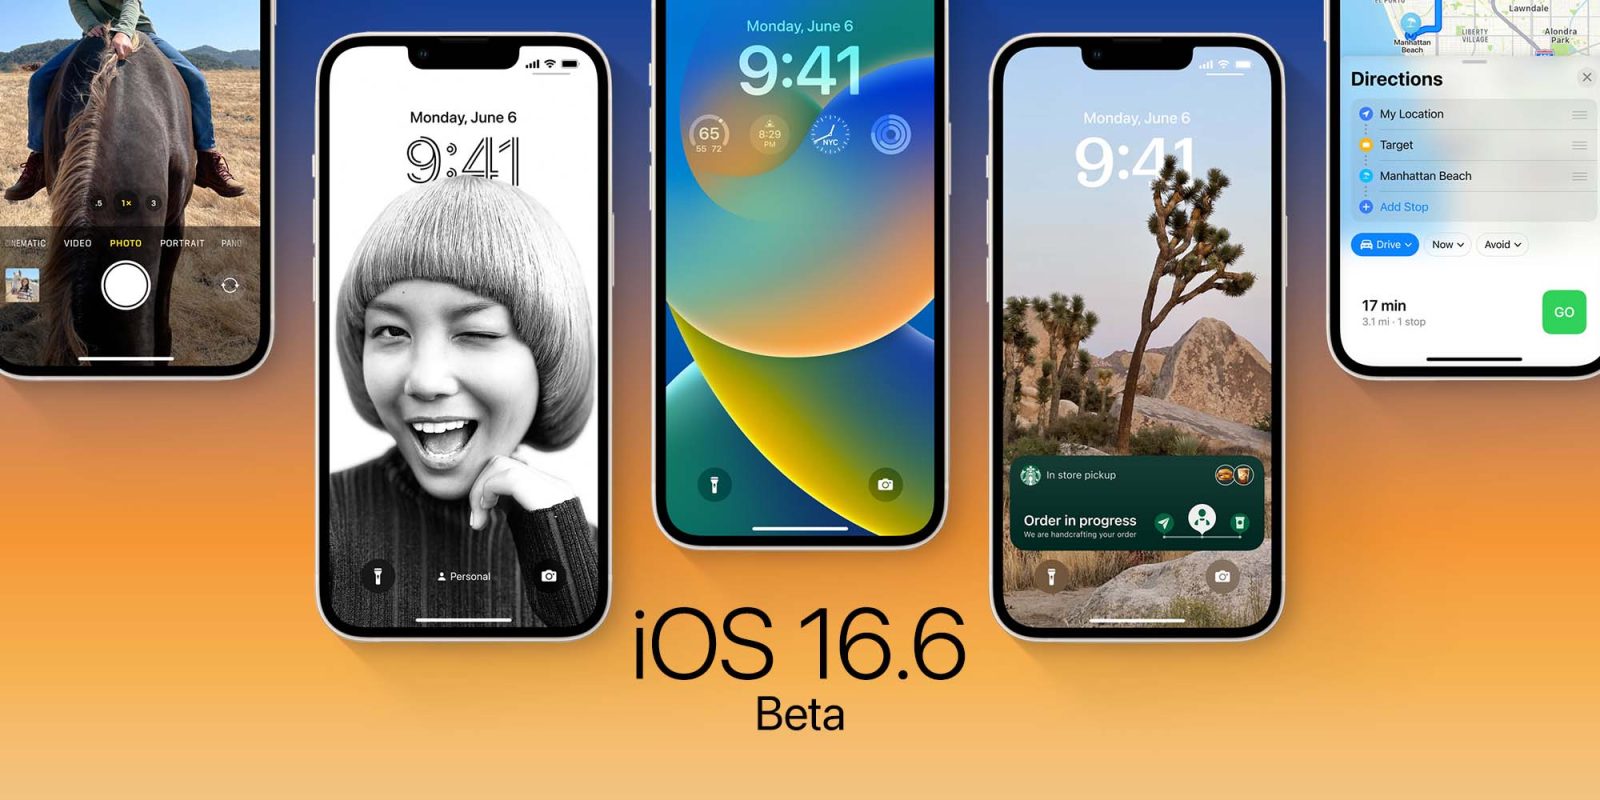 iOS 16.6 beta